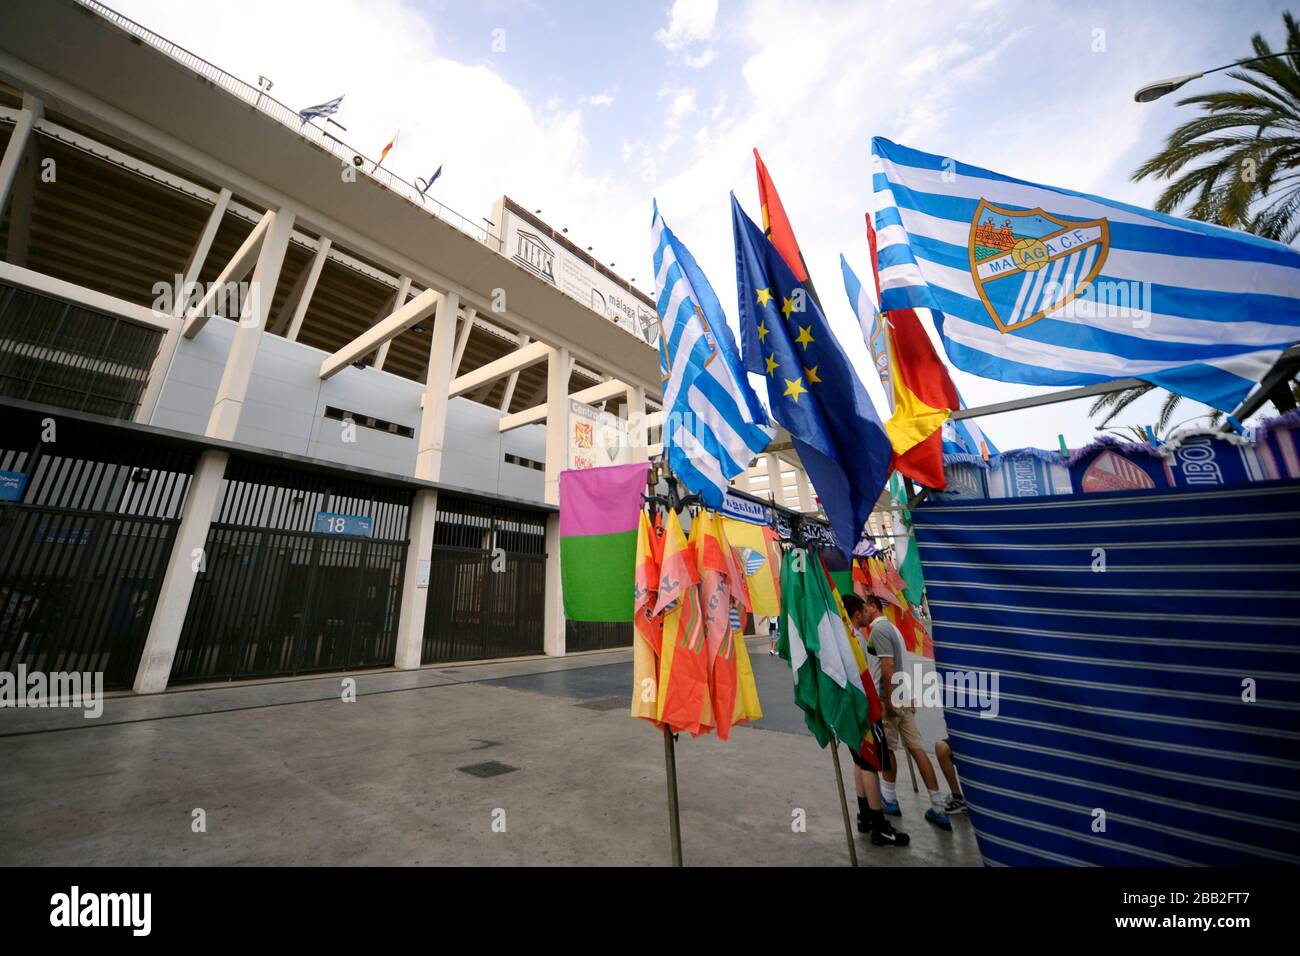 A Look Inside the Football Stadium of Malaga Editorial Stock Photo